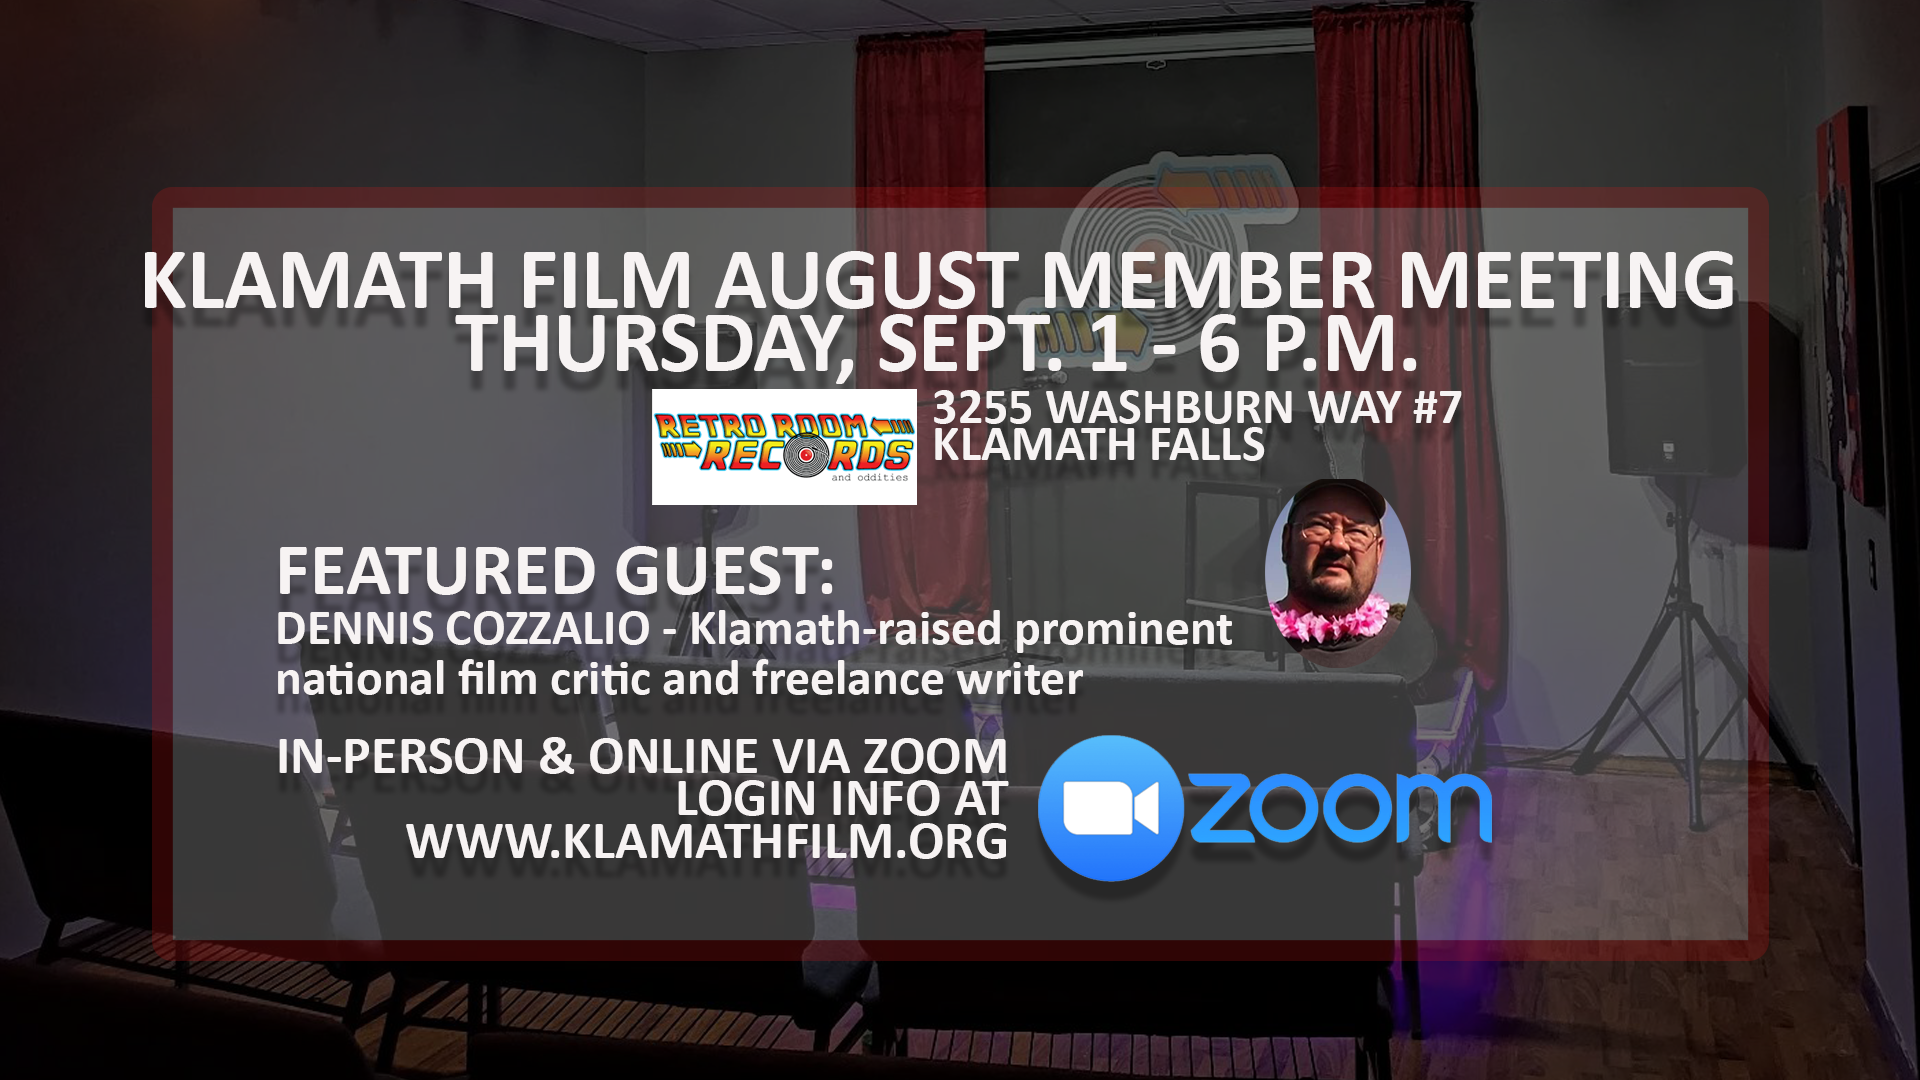 Prominent Klamath-raised national film critic Dennis Cozzalio to join September Klamath Film Member Meeting